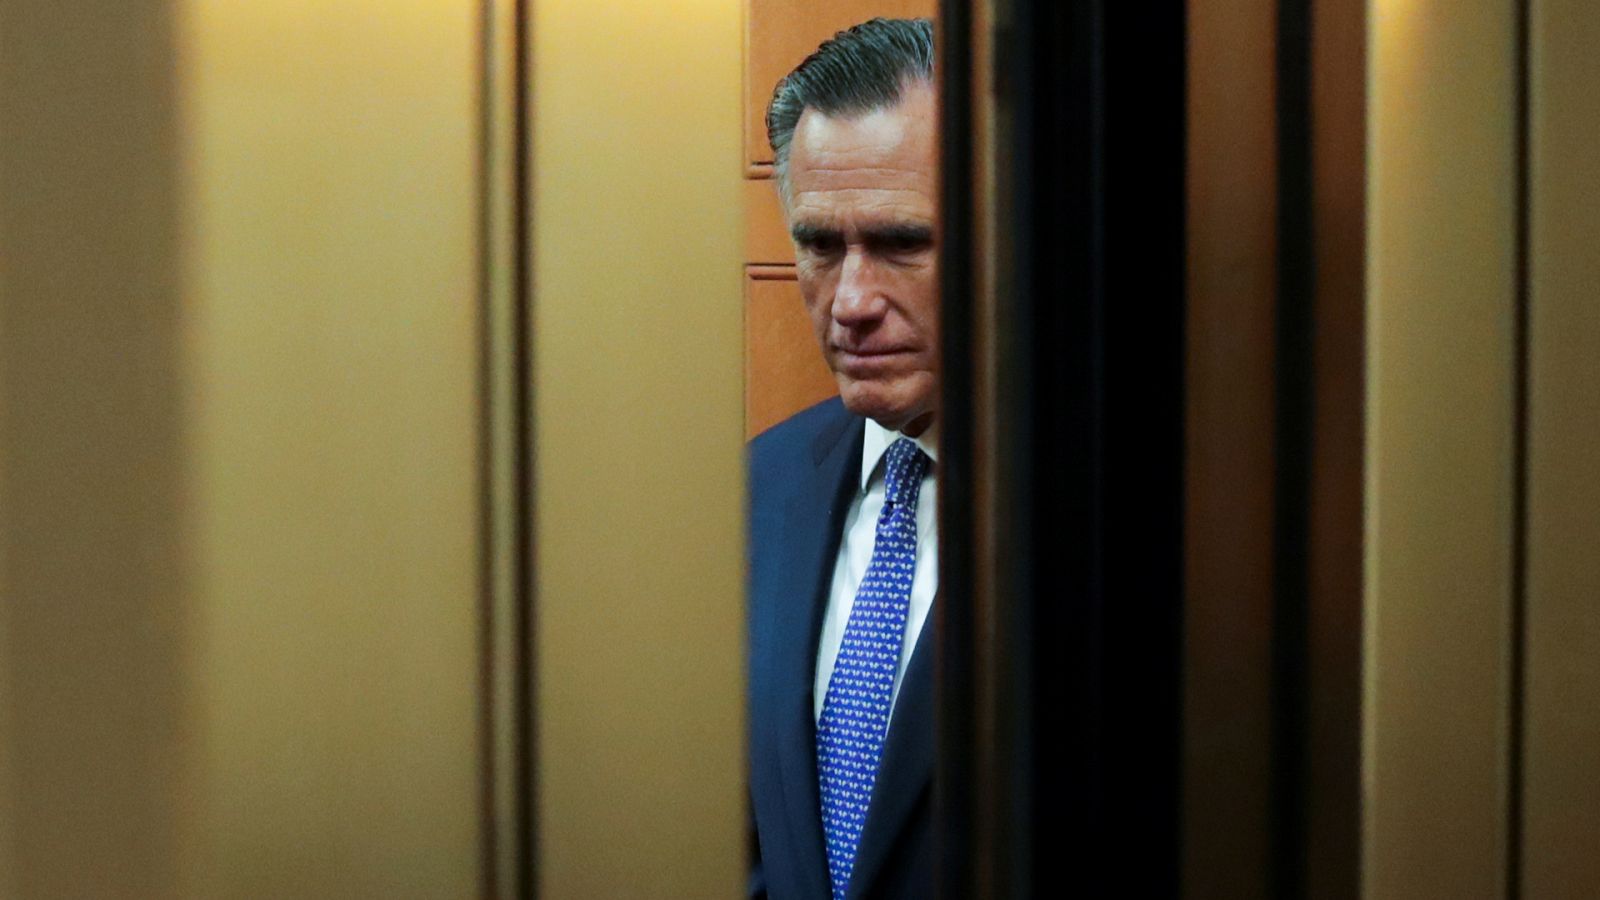 El senador republicano Mitt Romney votó a favor de destituir a Donald Trump, de su mismo partido